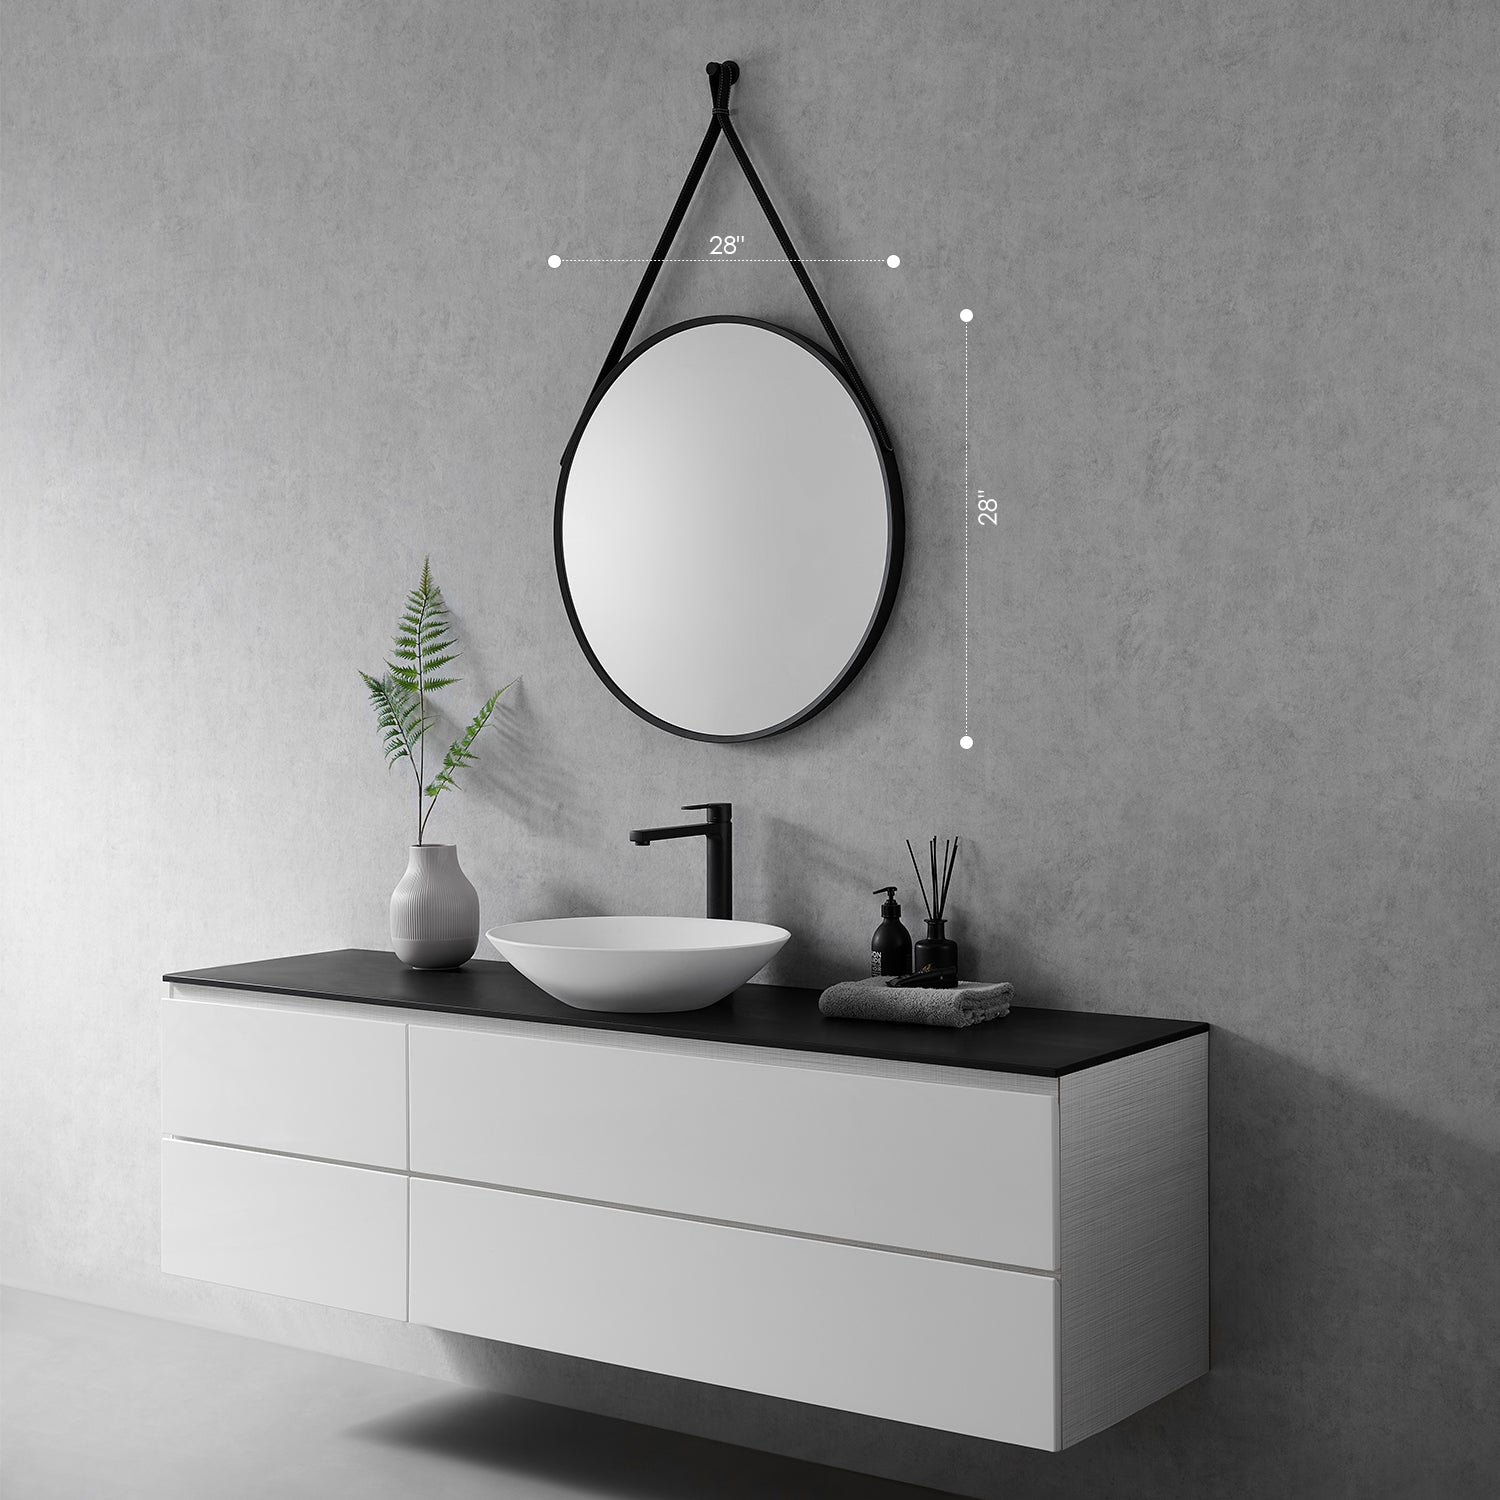 Epoca 28" Circle Bathroom Vanity Aluminum Framed Wall Mirror